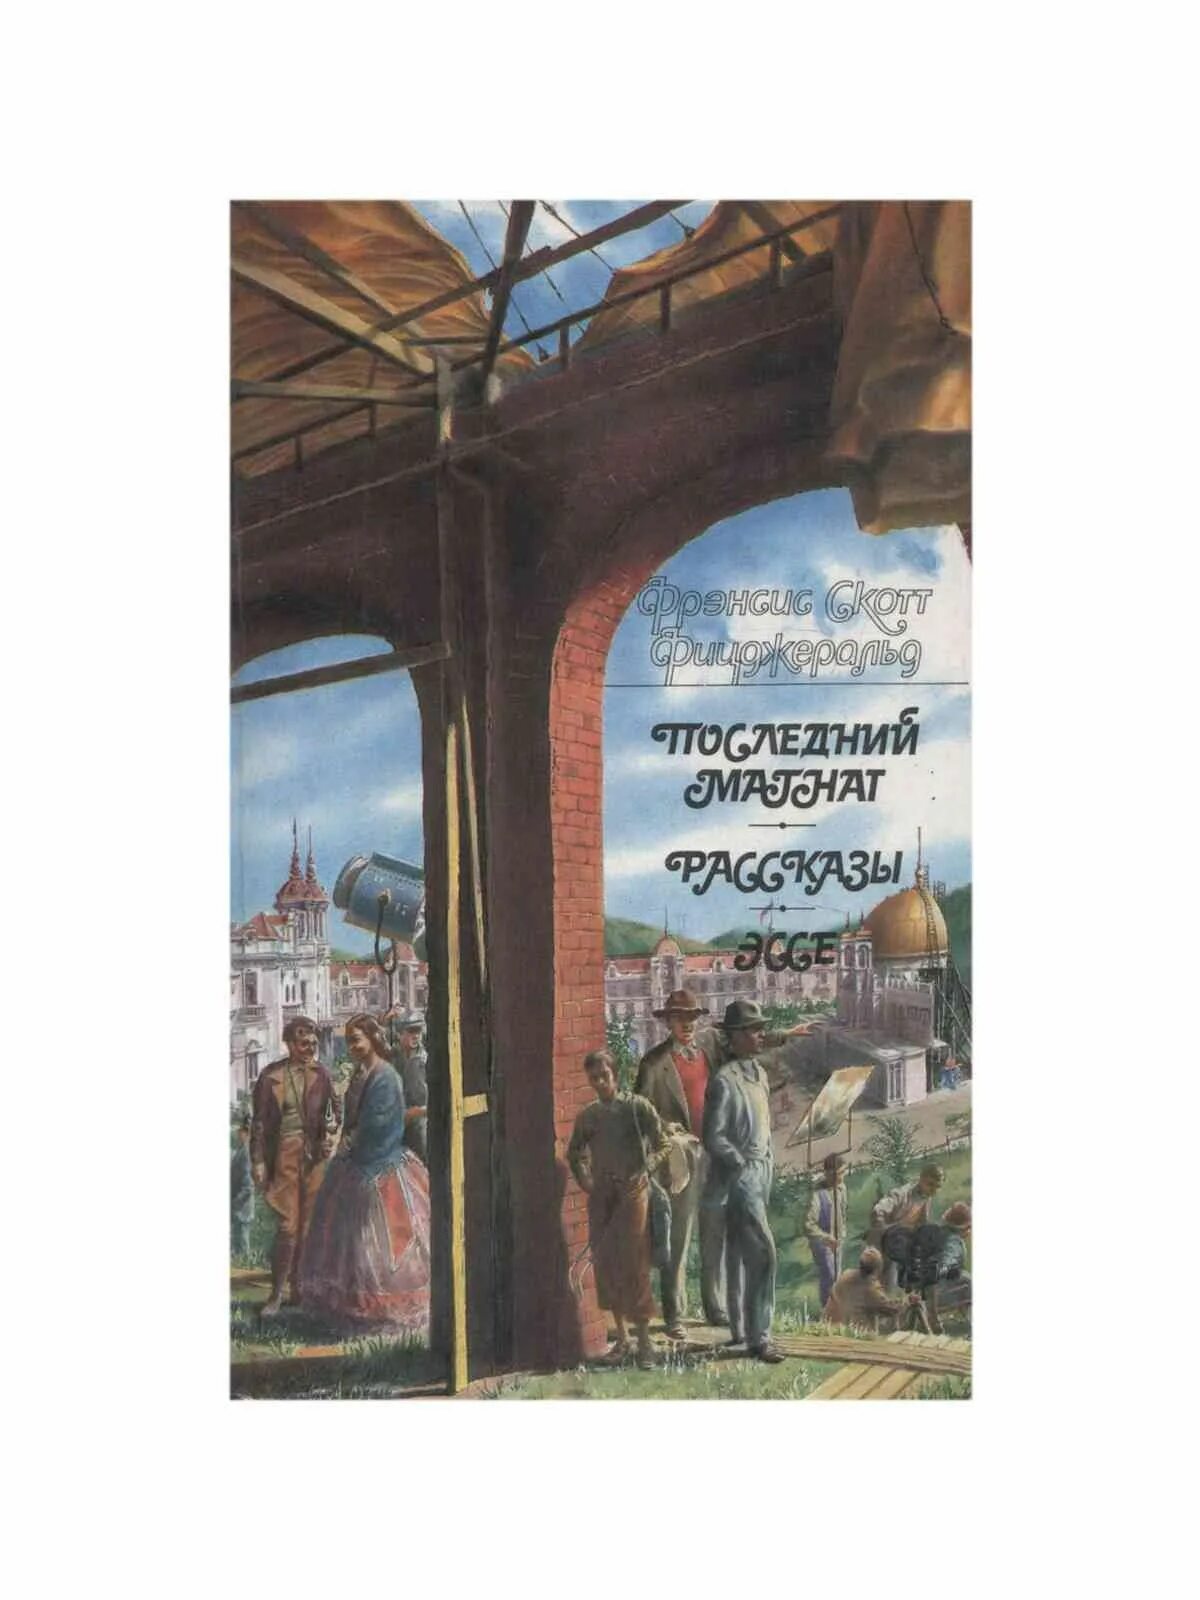 Тайный сын магнат читать полностью. Последний Магнат 1974 г. ISBN 5-253-00157-3.